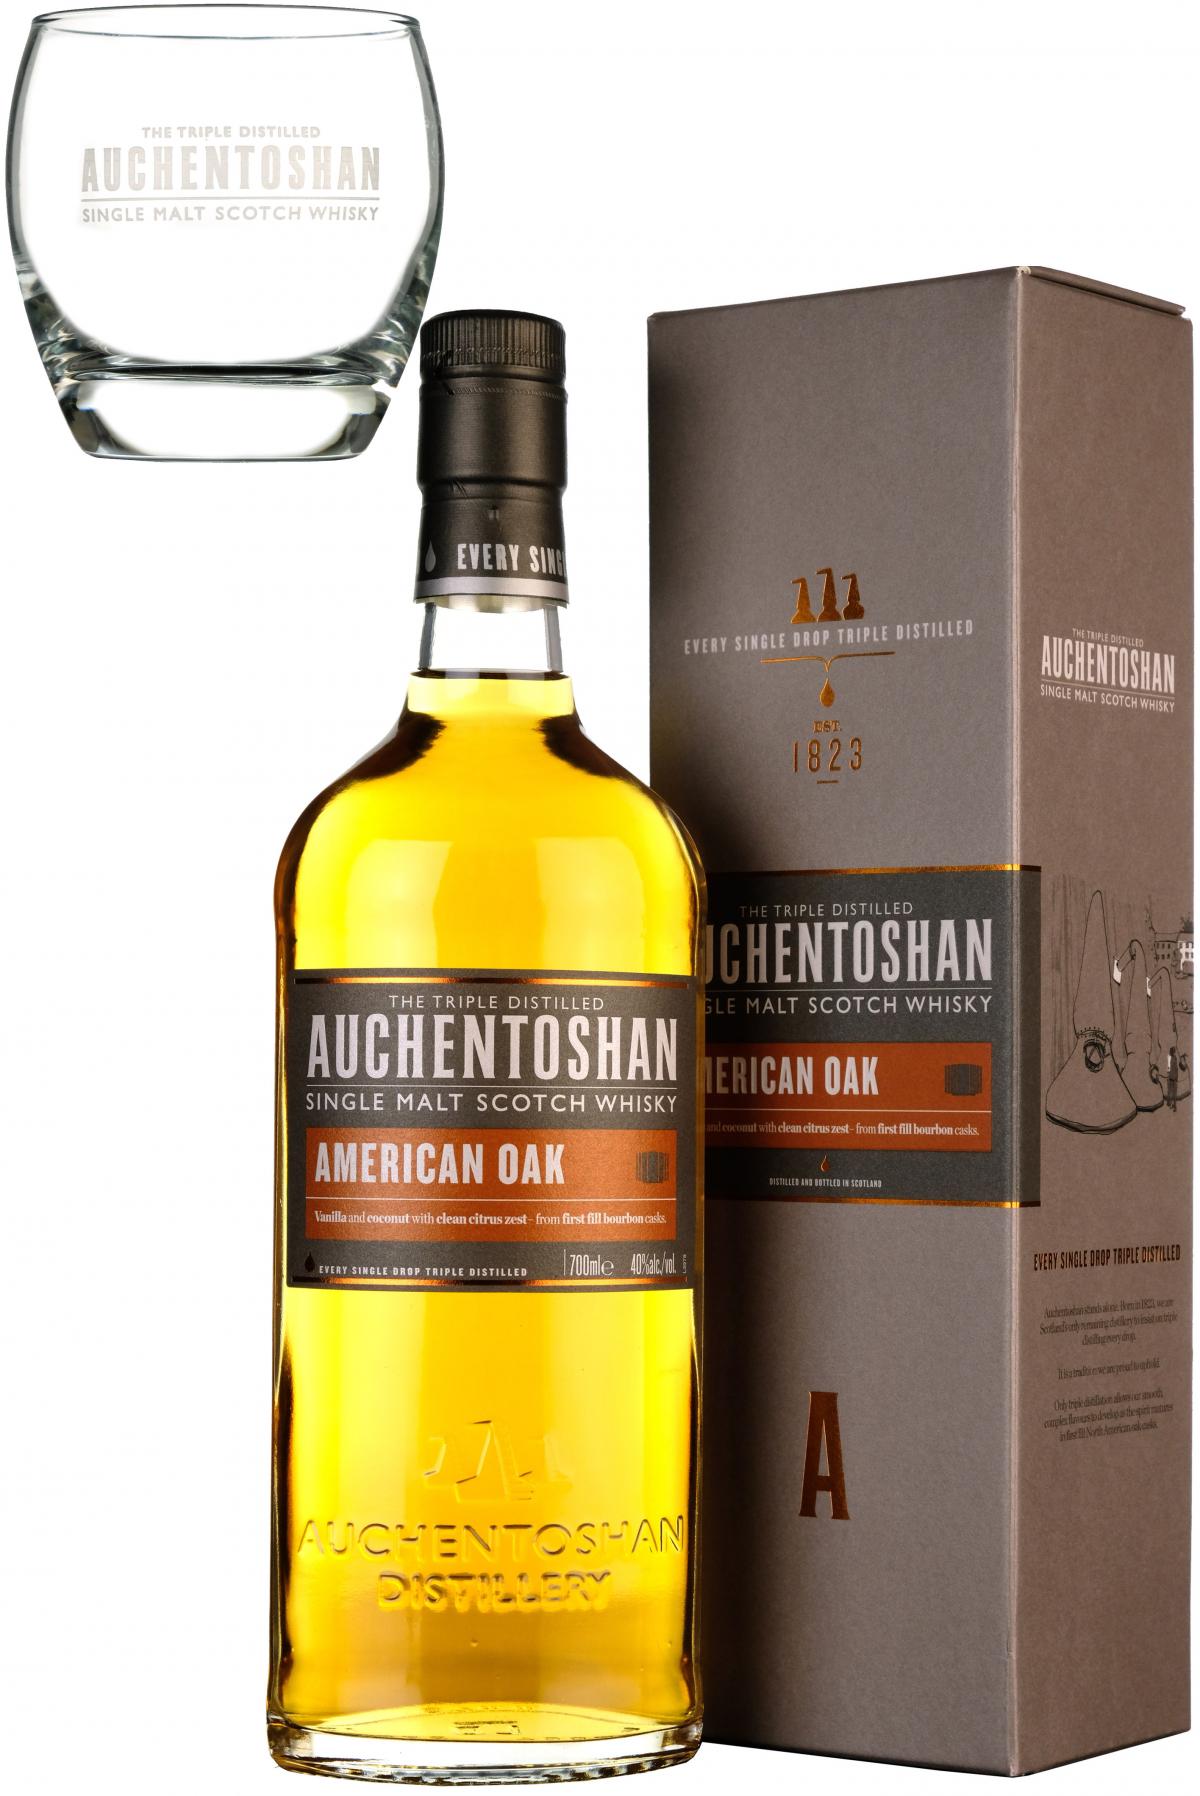 auchentoshan american oak, lowland single malt scotch whisky